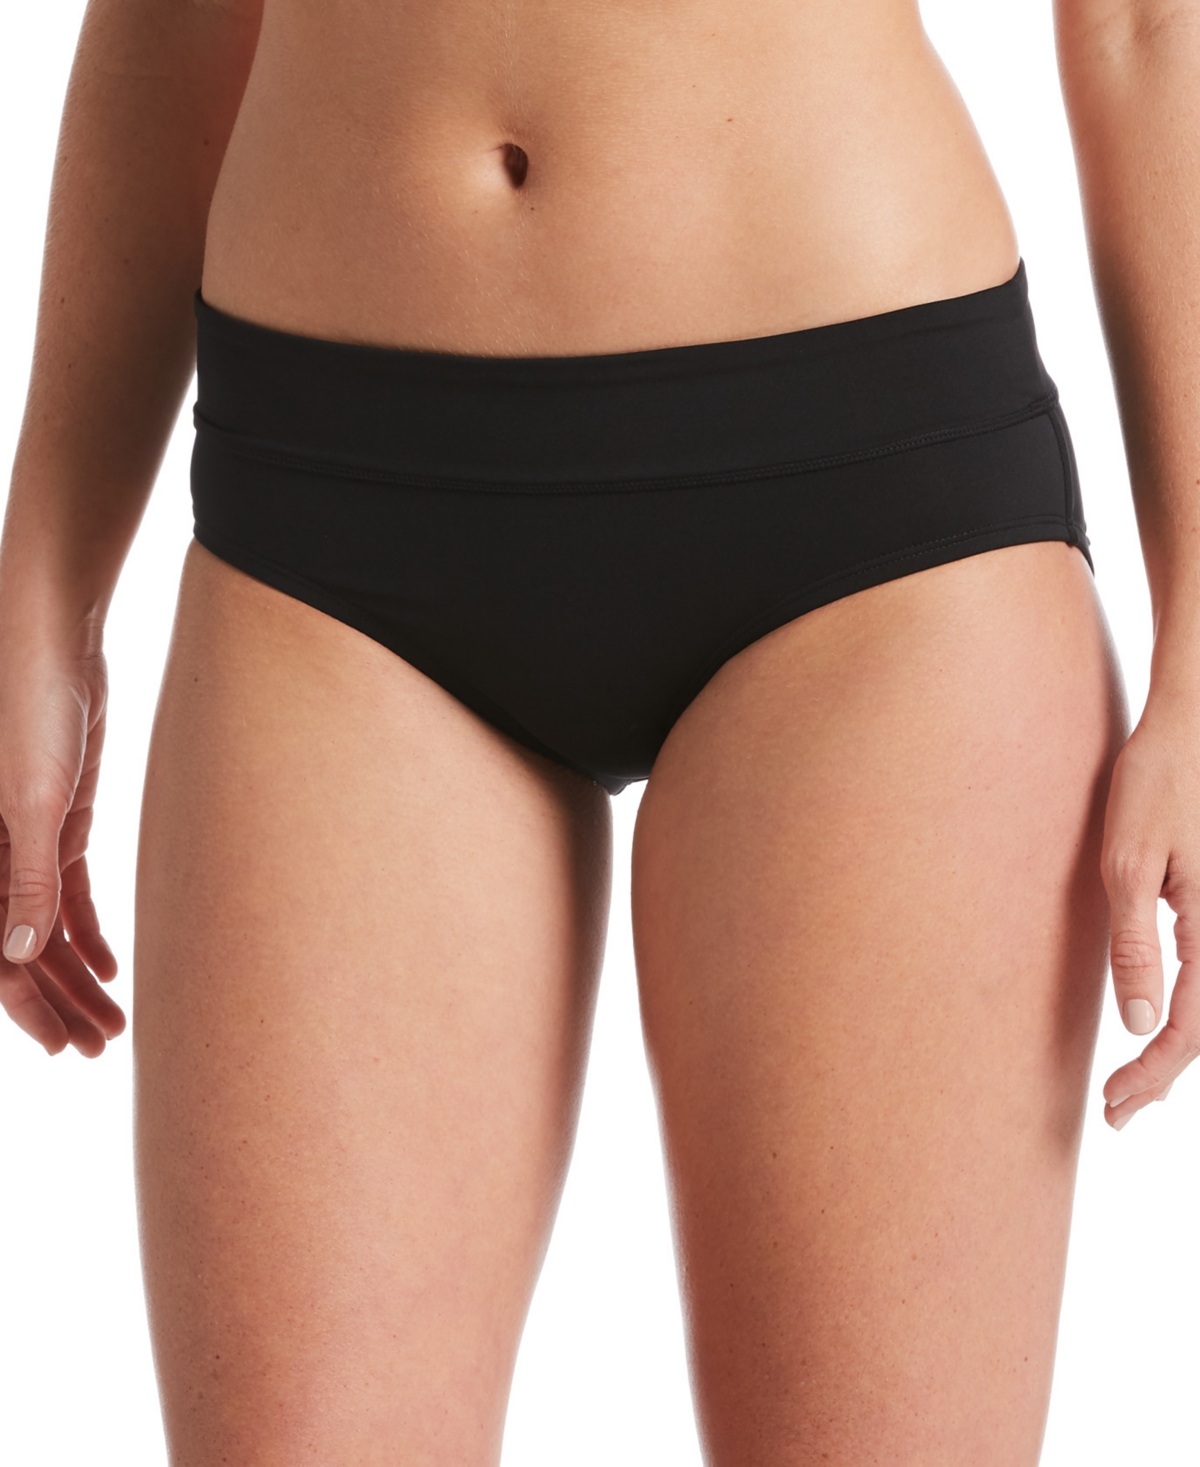 Nike Active Hipster Bikini Bottoms Women's Swimsuit